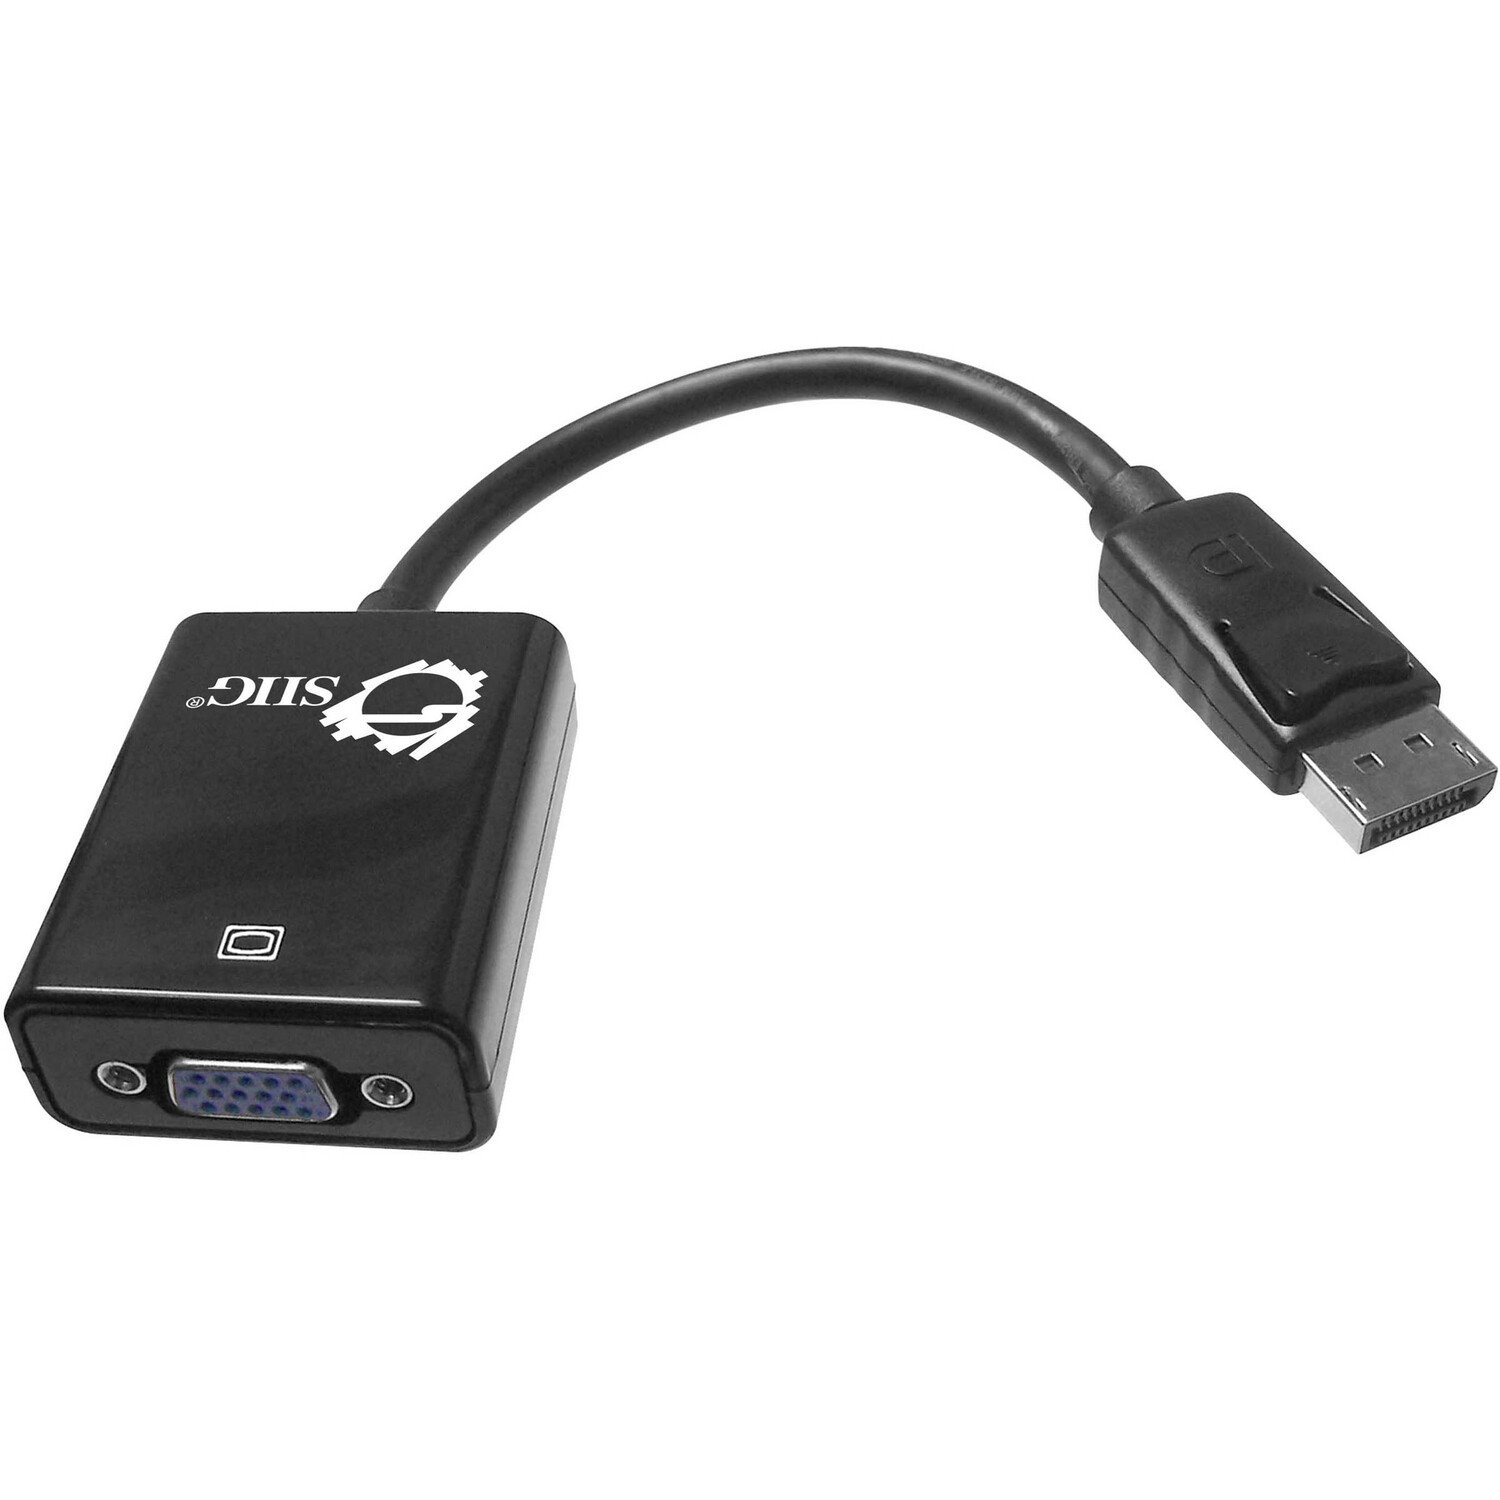 SIIG 22.86 cm DisplayPort/VGA Video Cable